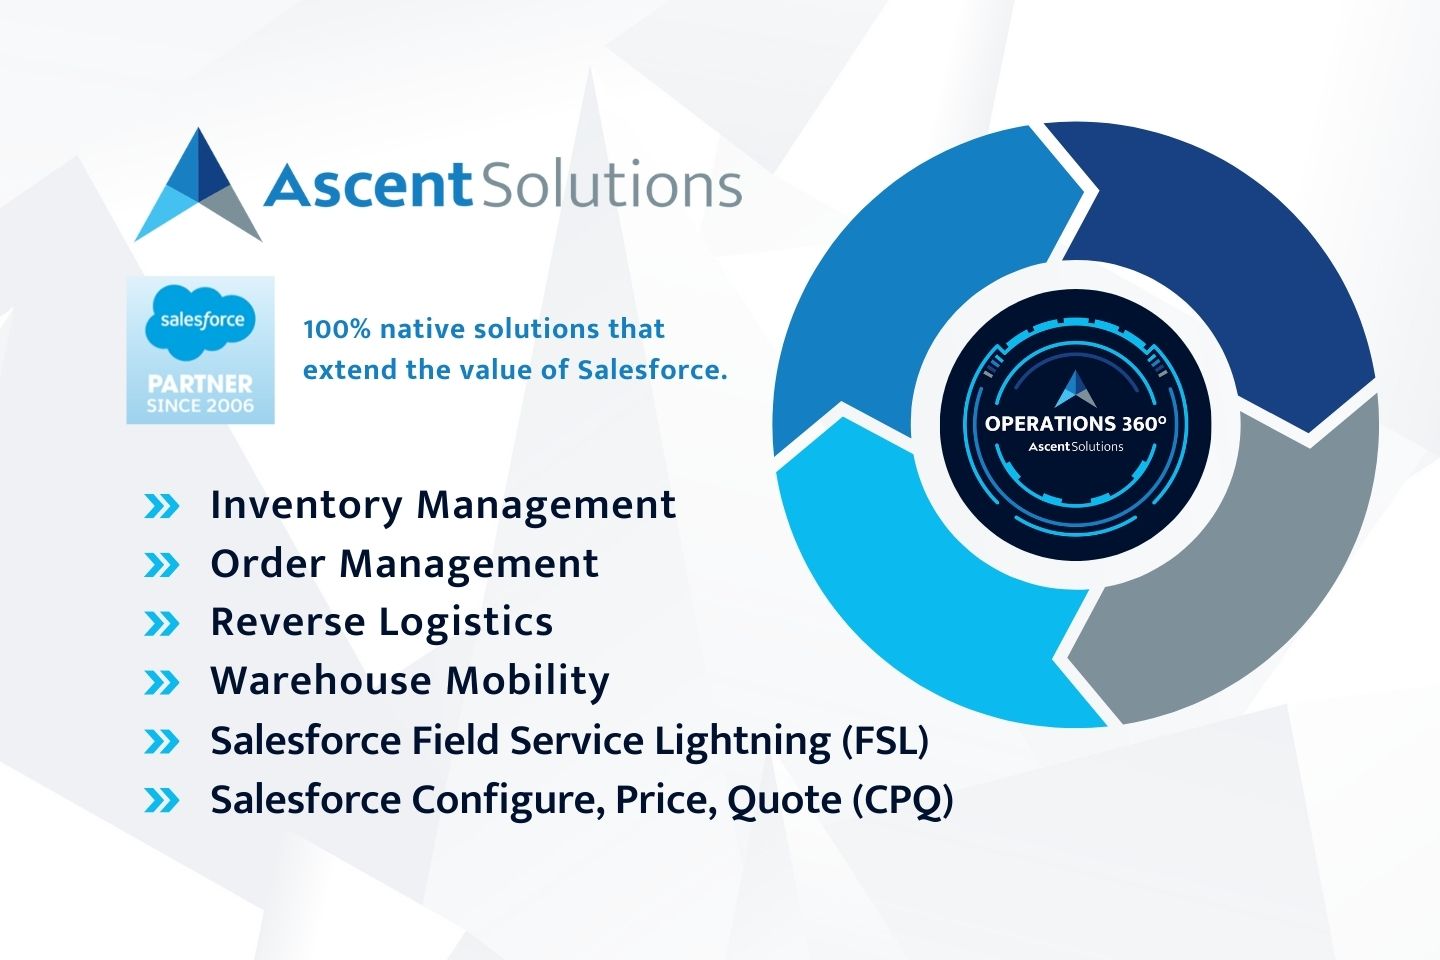 About Ascent Solutions Best Cloud Salesforce ERP on AppExchange